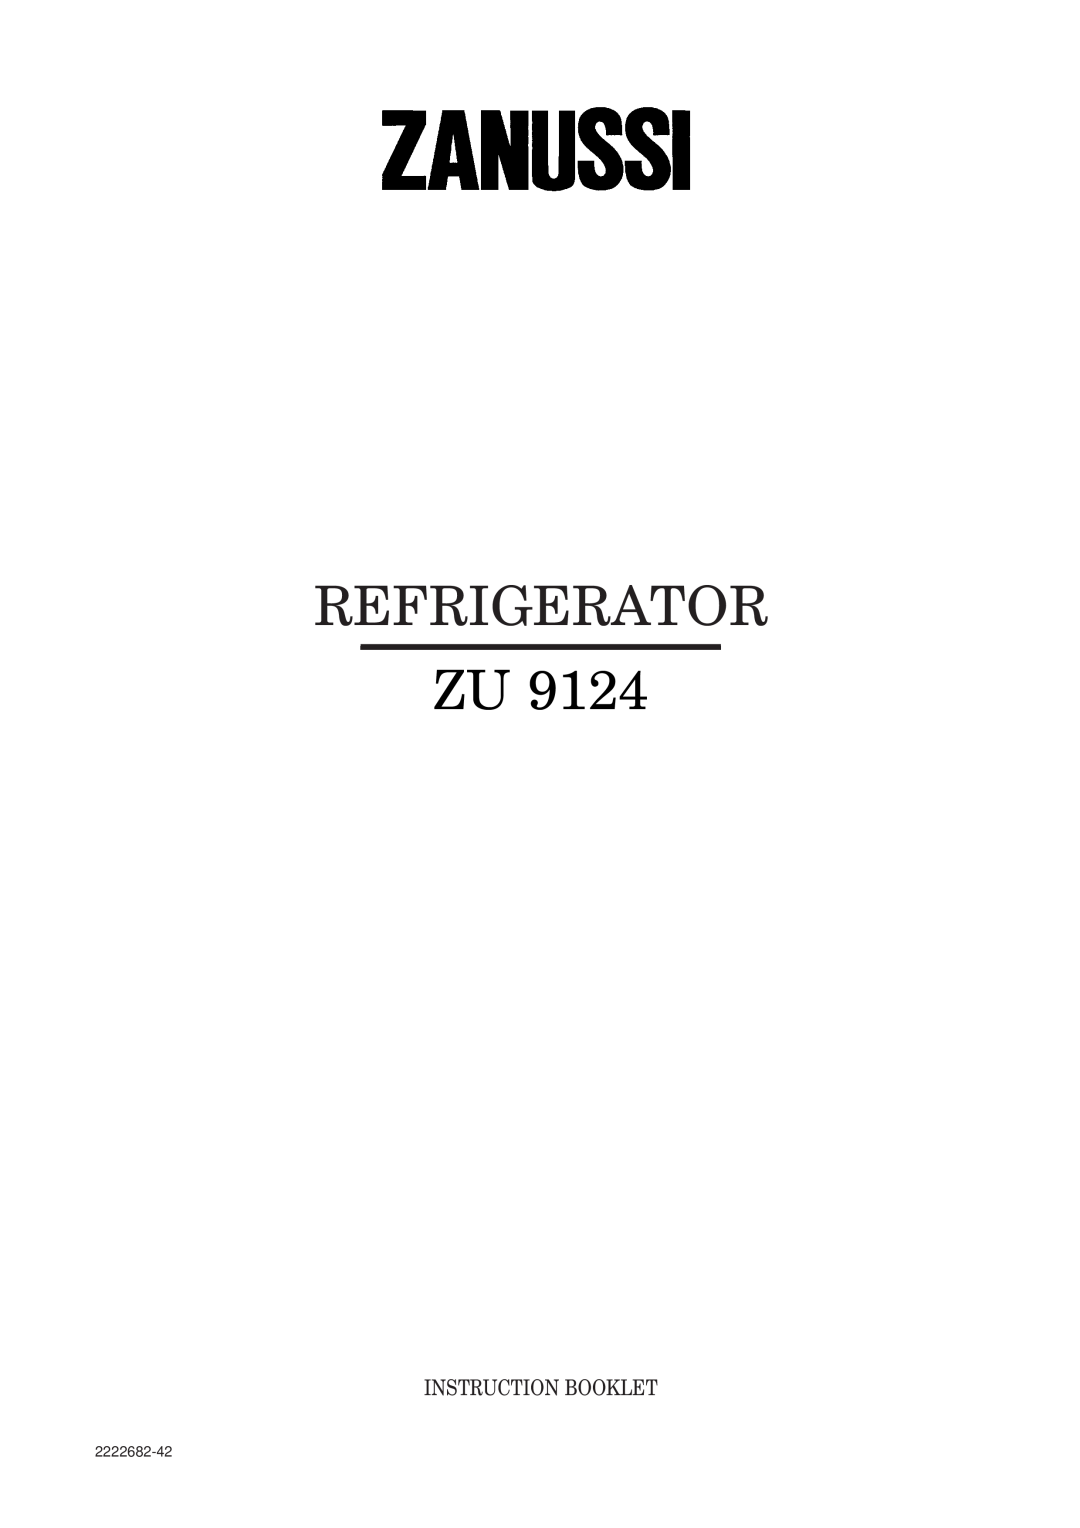 Zanussi ZU 9124 manual Refrigerator, Instruction Booklet, 2222682-42 